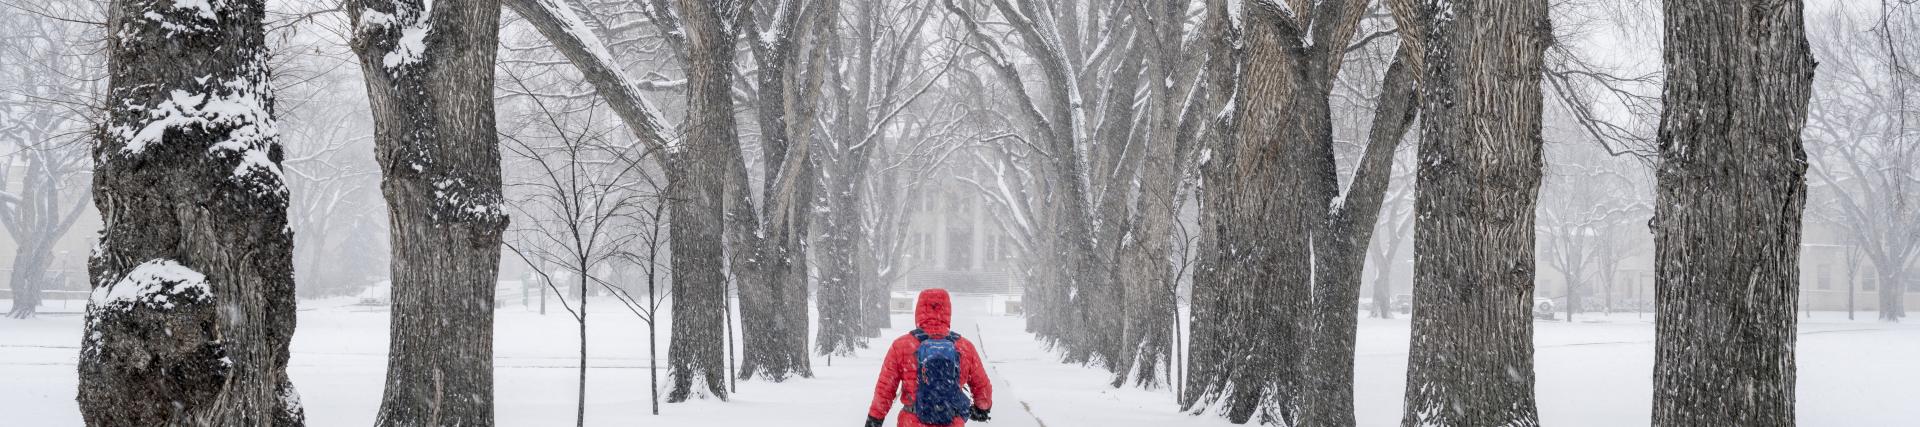 student walking through a snowy park